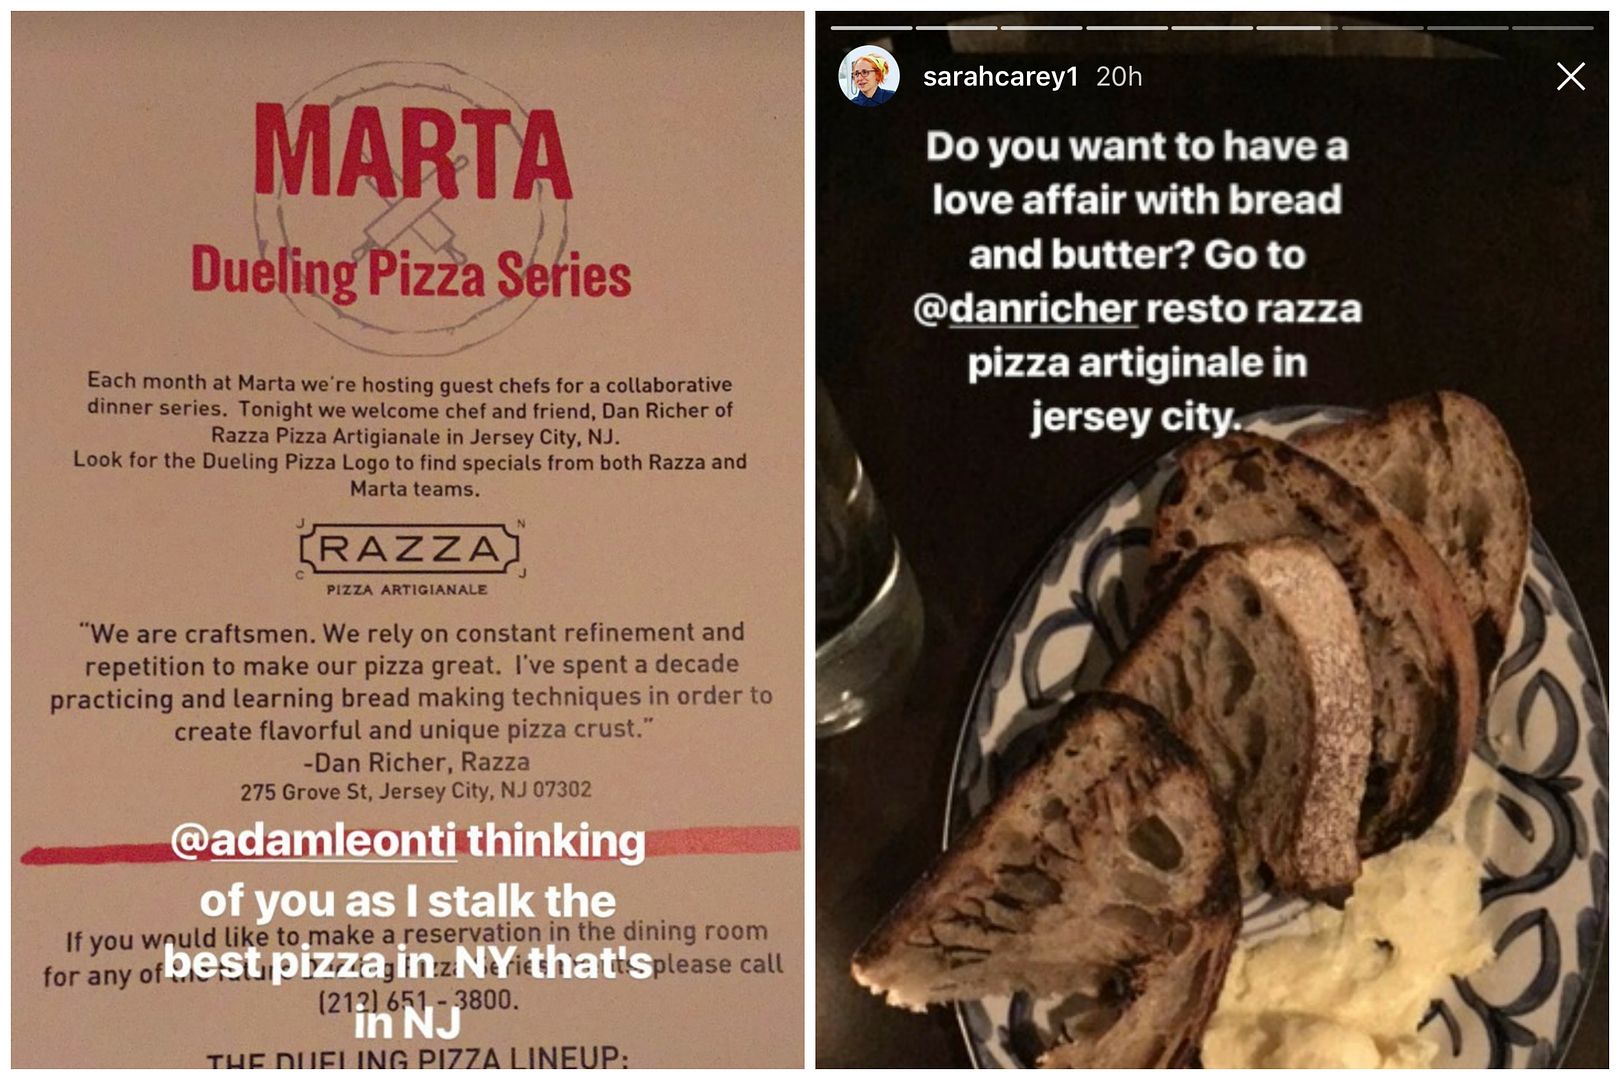 Best food Instagram accounts to follow for Instagram Stories: Sarah Carey aka SarahCarey1